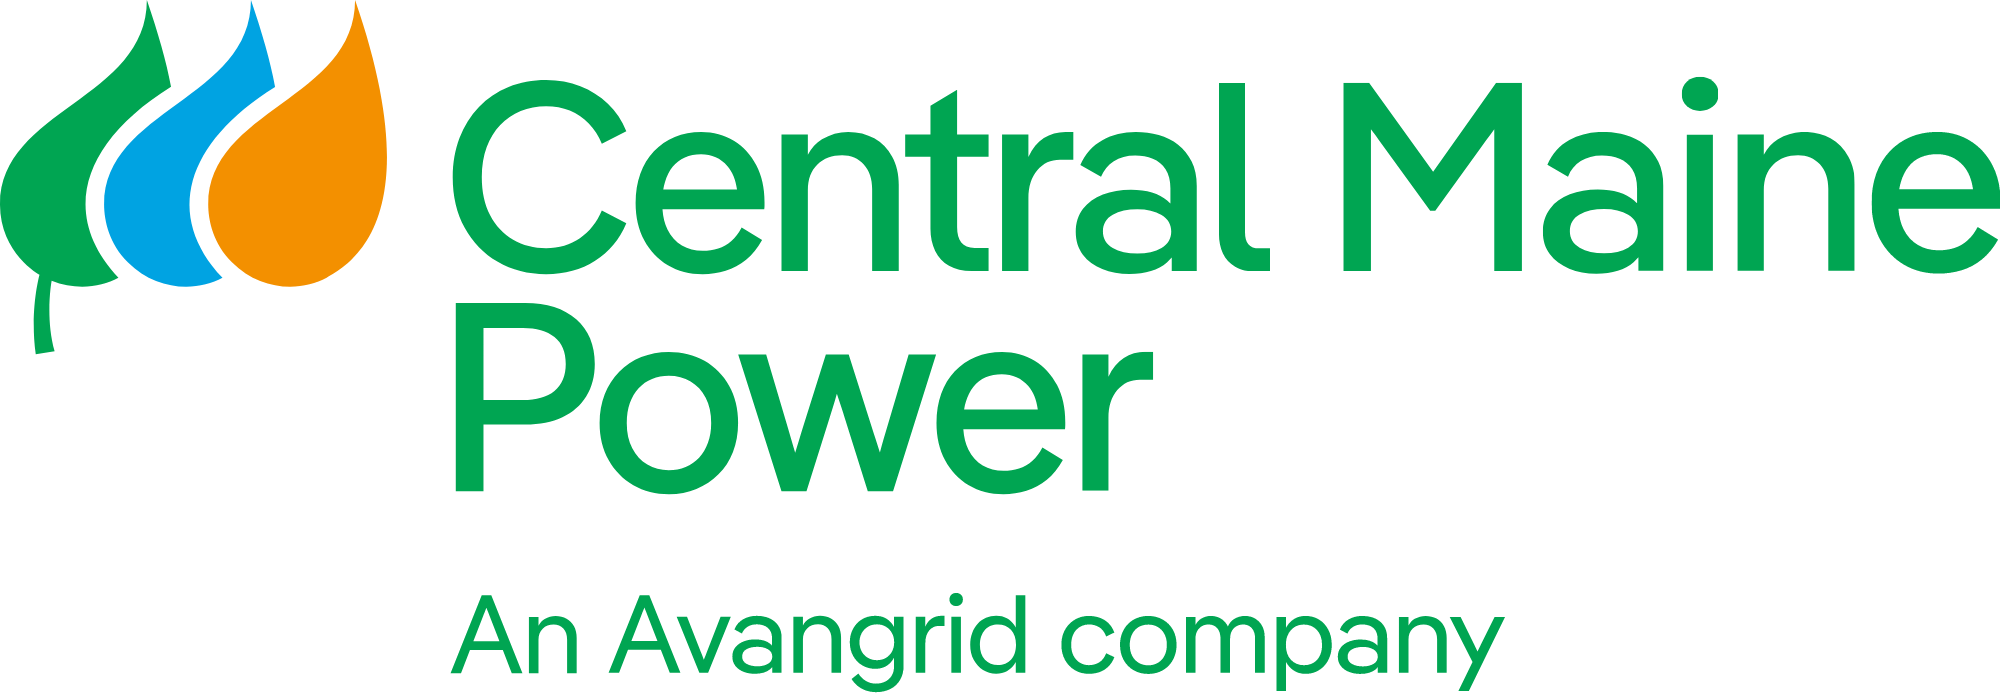 CMP Central Maine Power Logo (1)